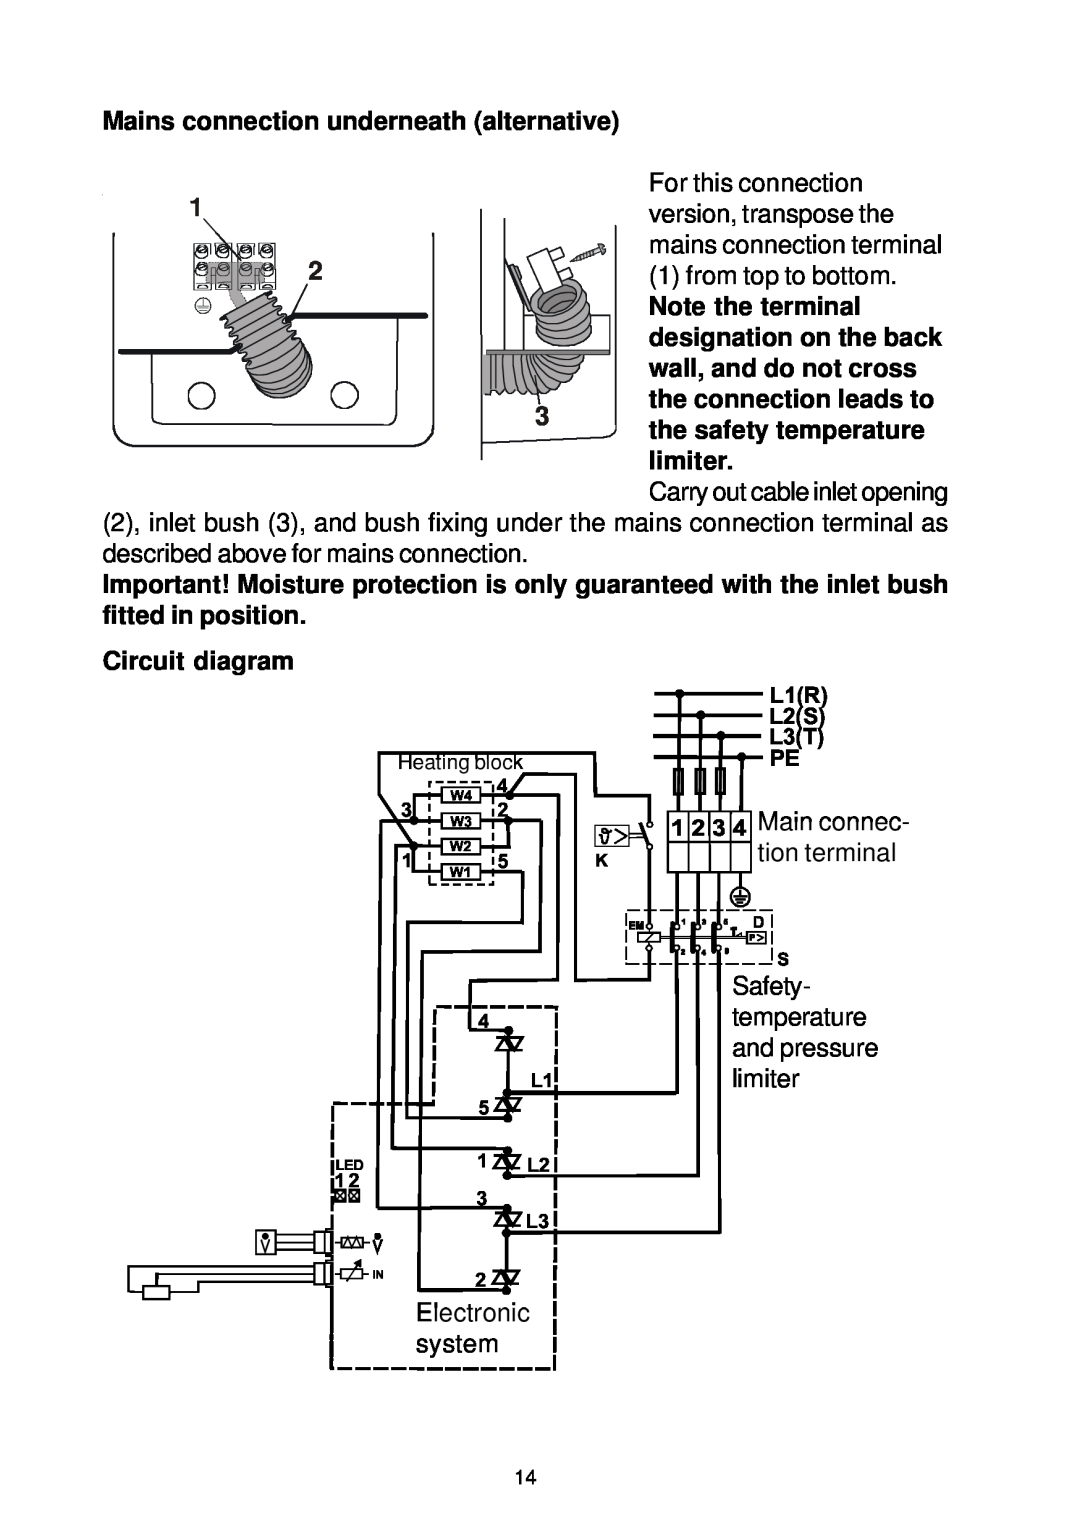 Electrolux IH21, IH24, IH 18 manual Mains connection underneath alternative 